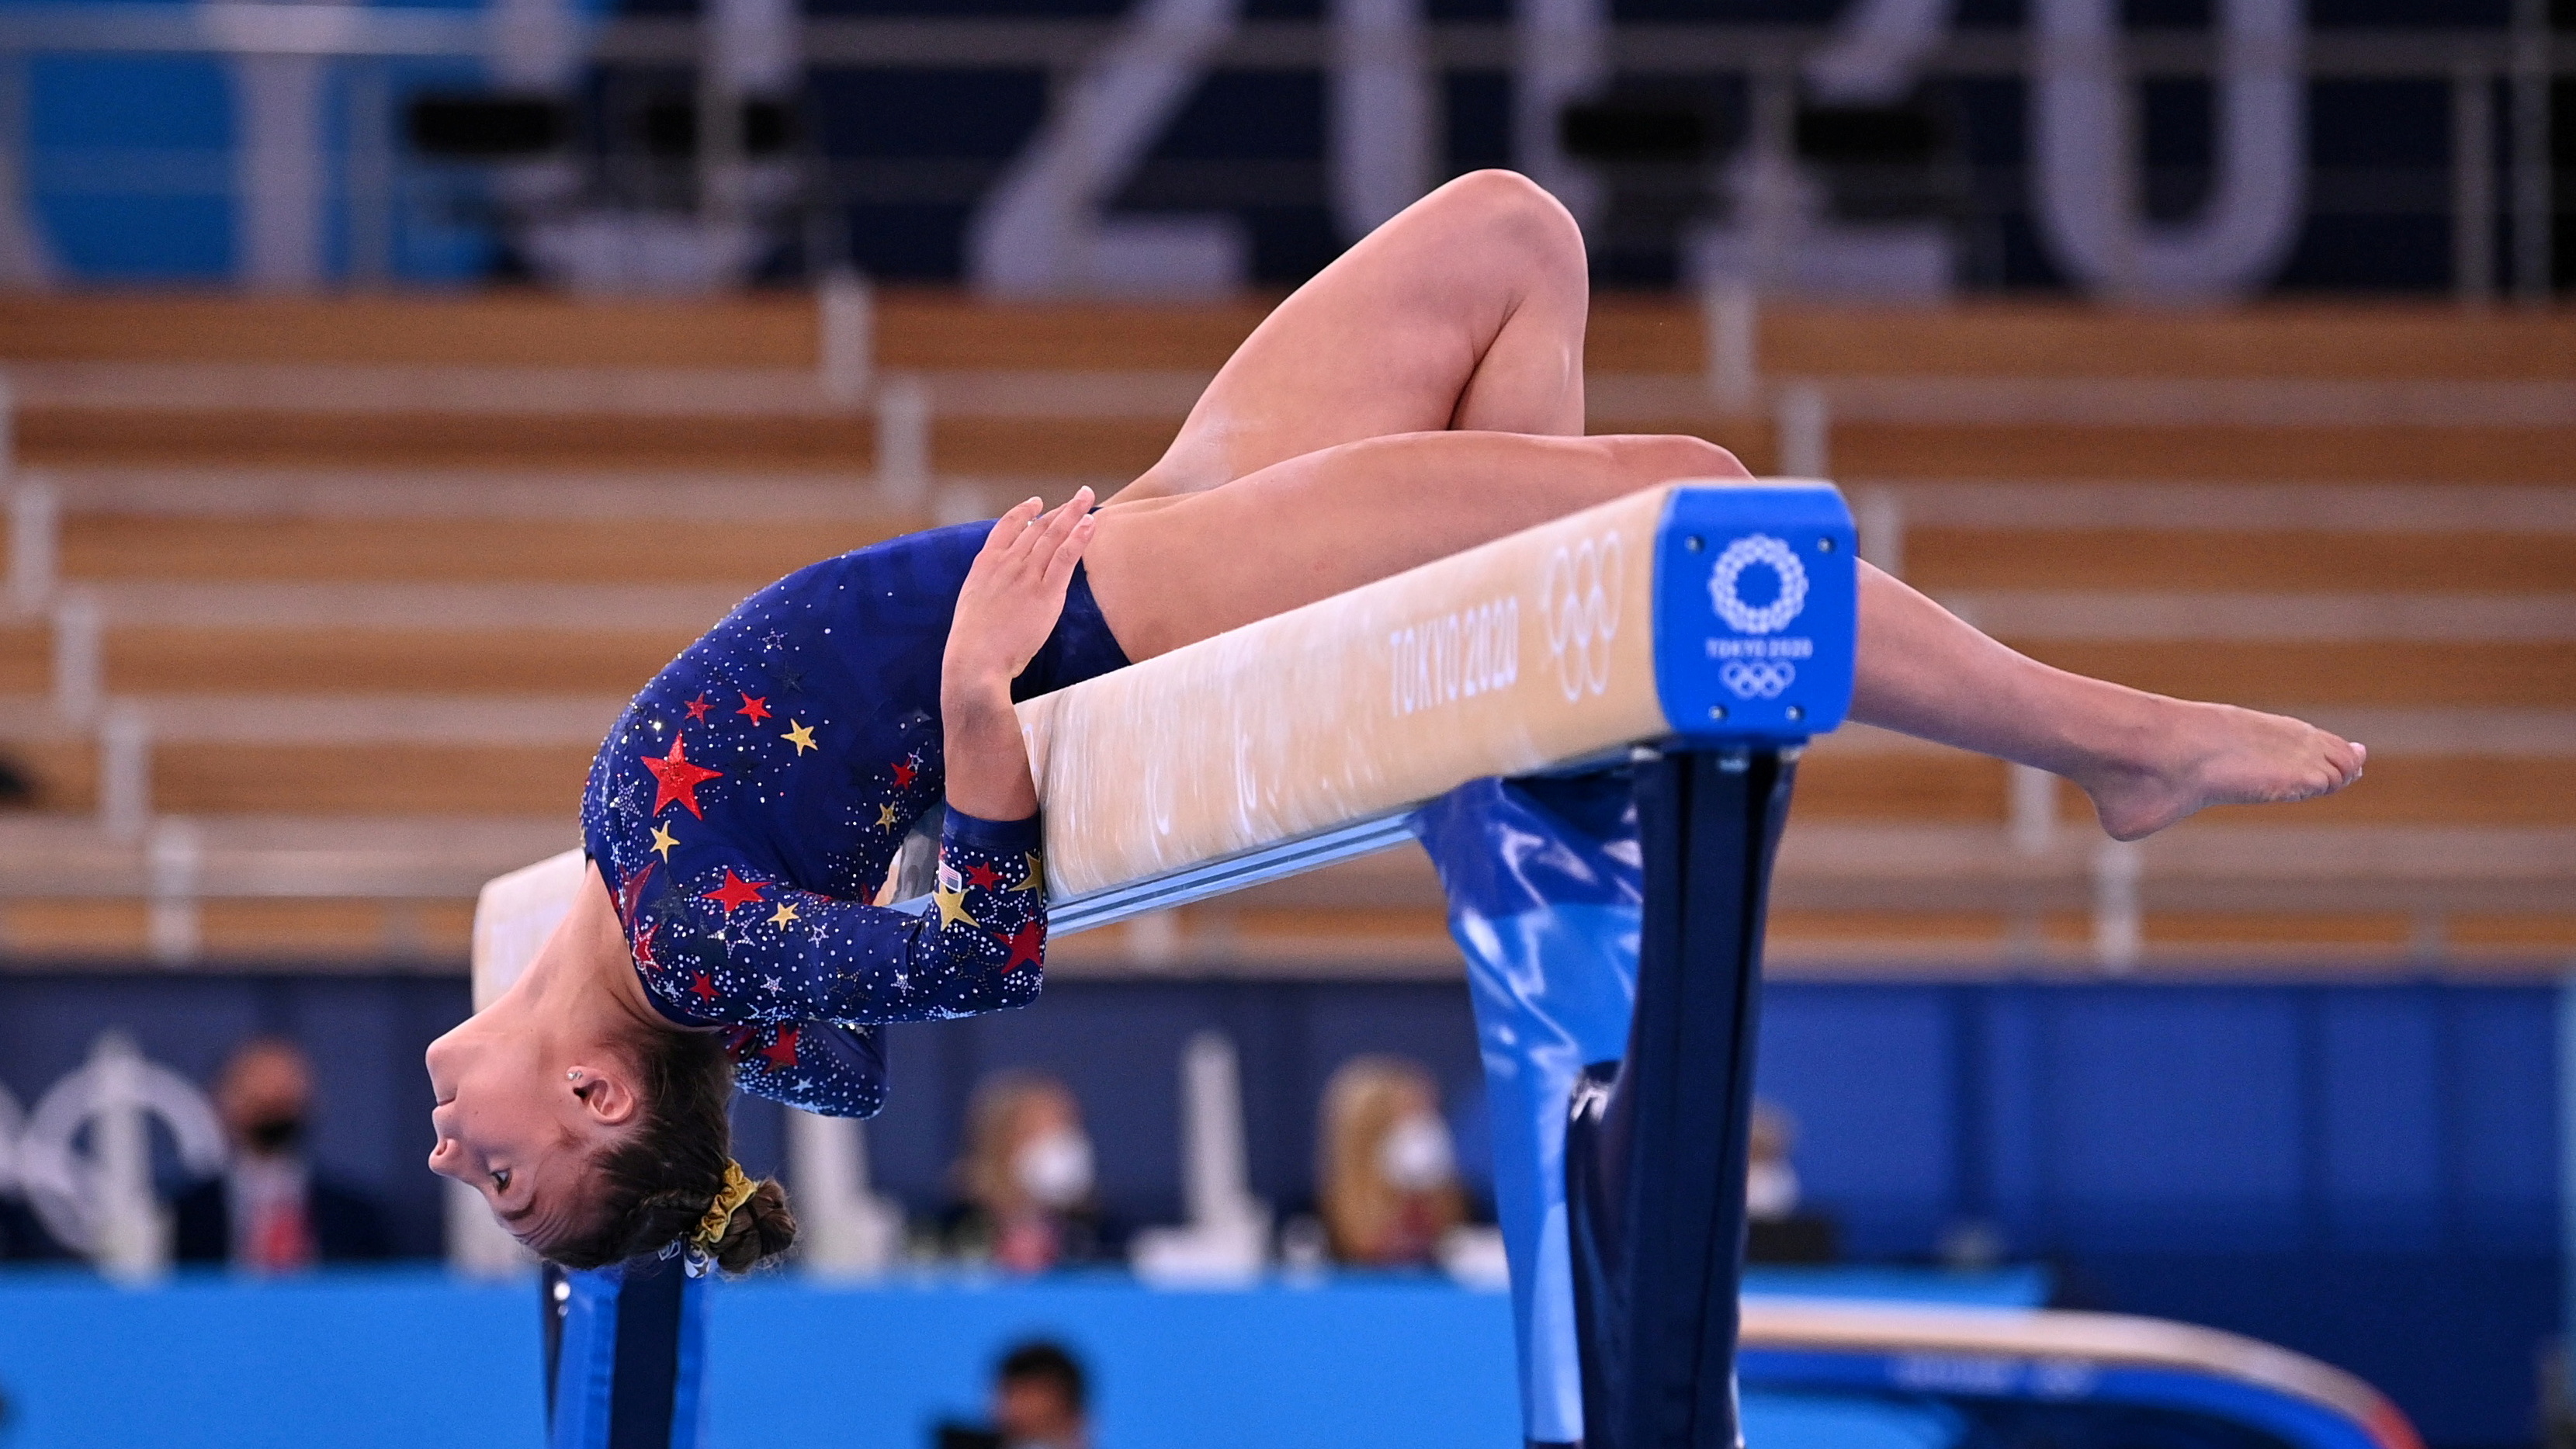 2020 Tokyo Olympics: Qualification - Ireland  Olympic gymnastics leotards,  Gymnastics leotards, Olympic gymnastics